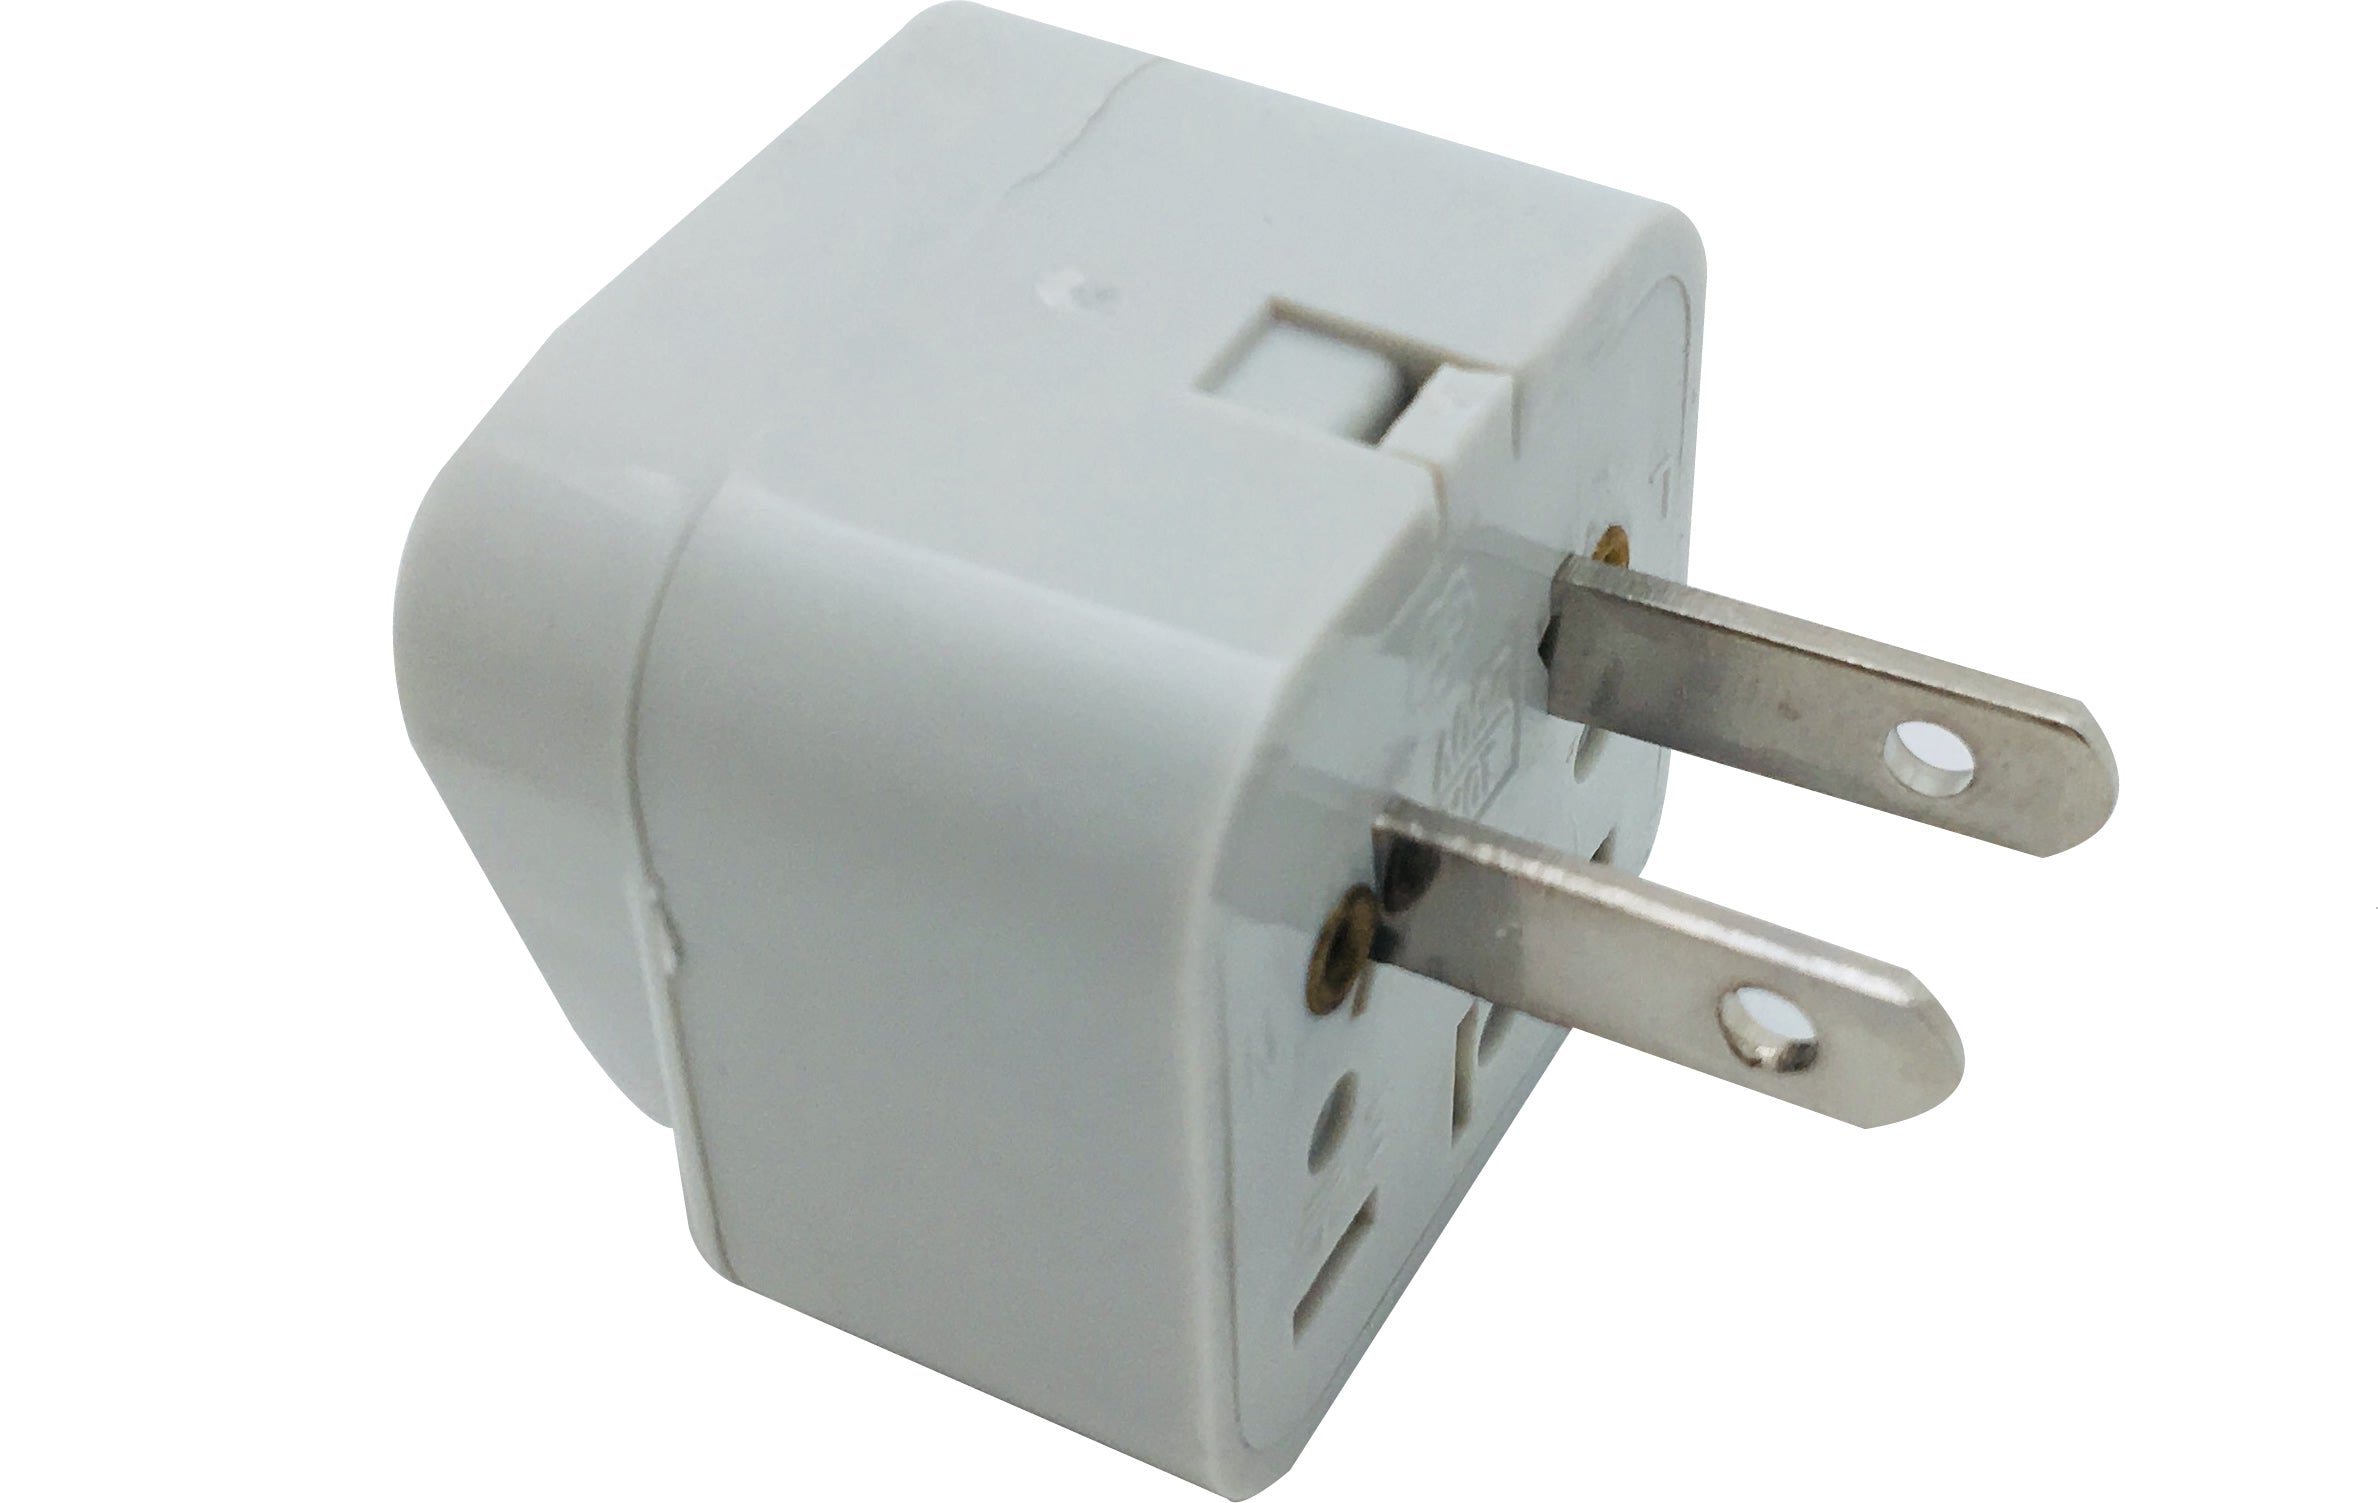 42-0305 Universal Power Plug Adapter: Flat blade attachment plug